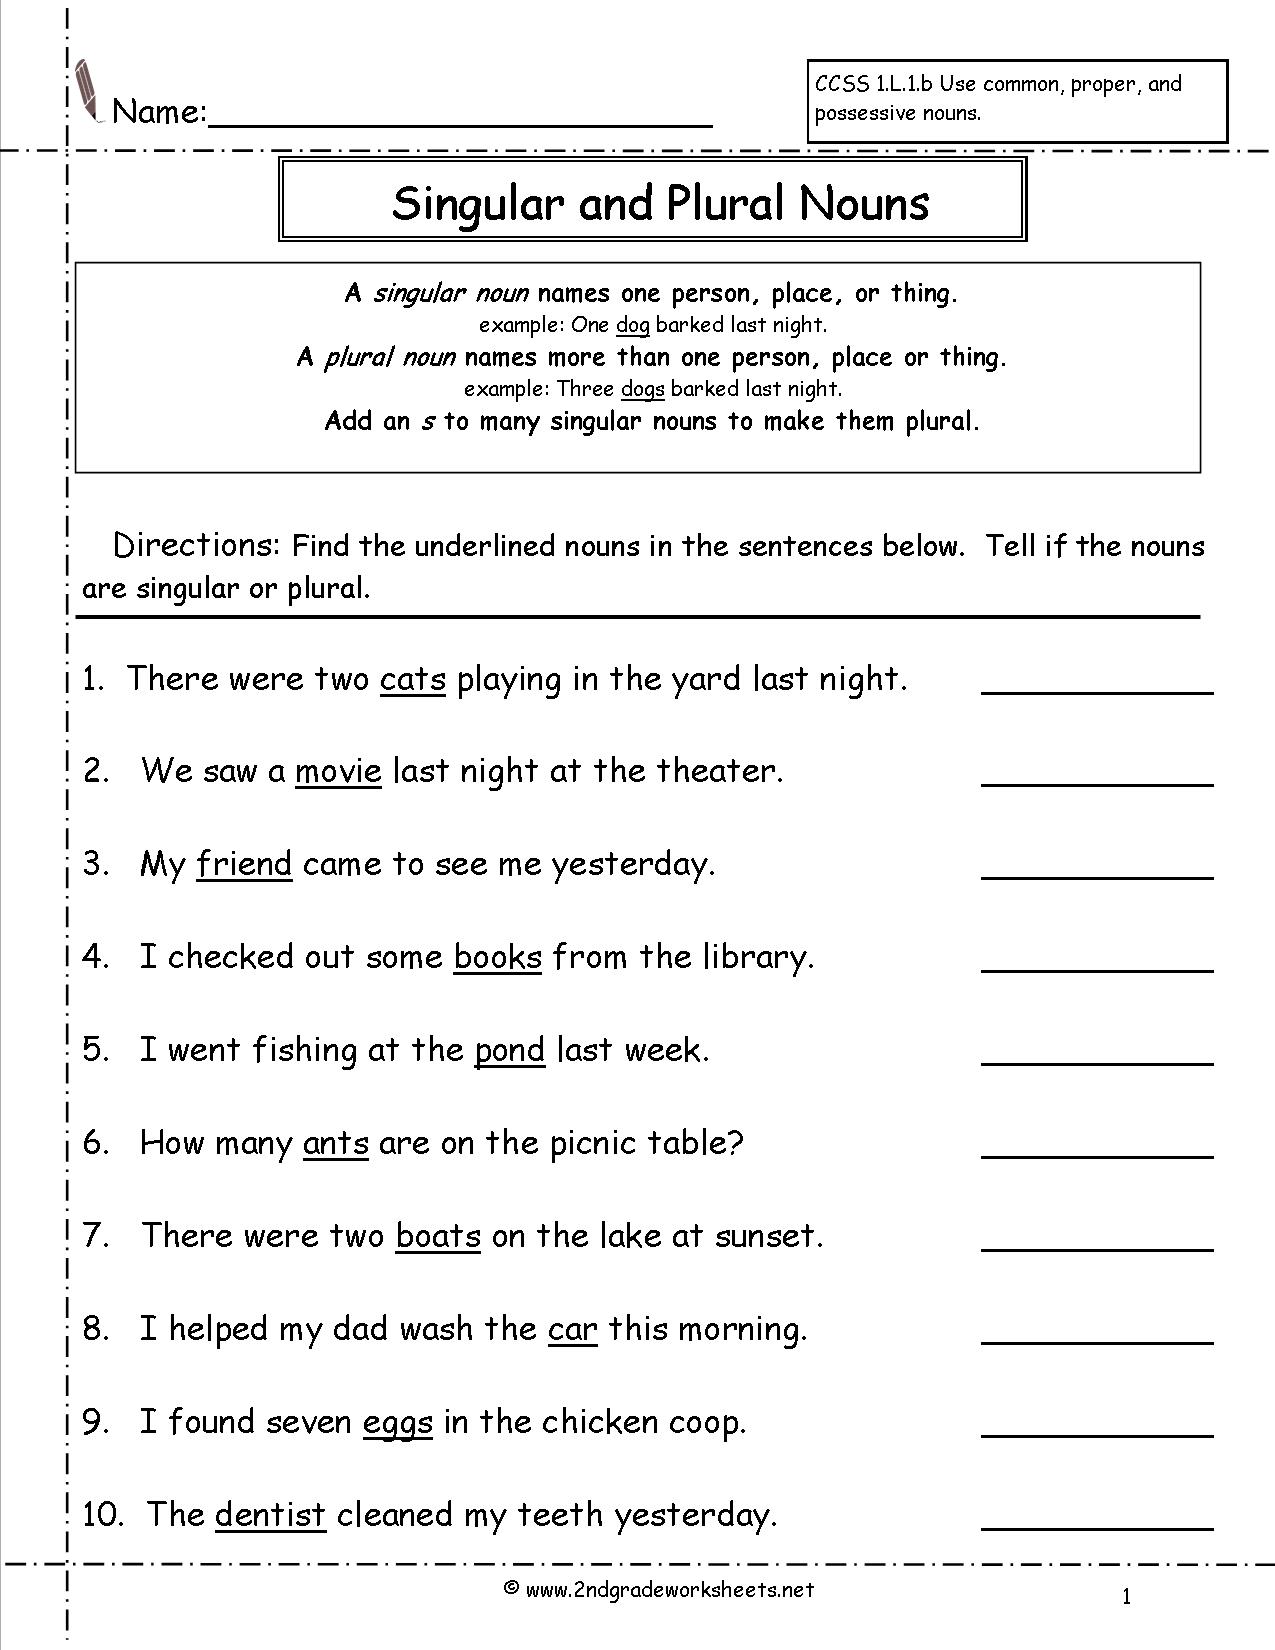 Worksheet Of Singular And Plural